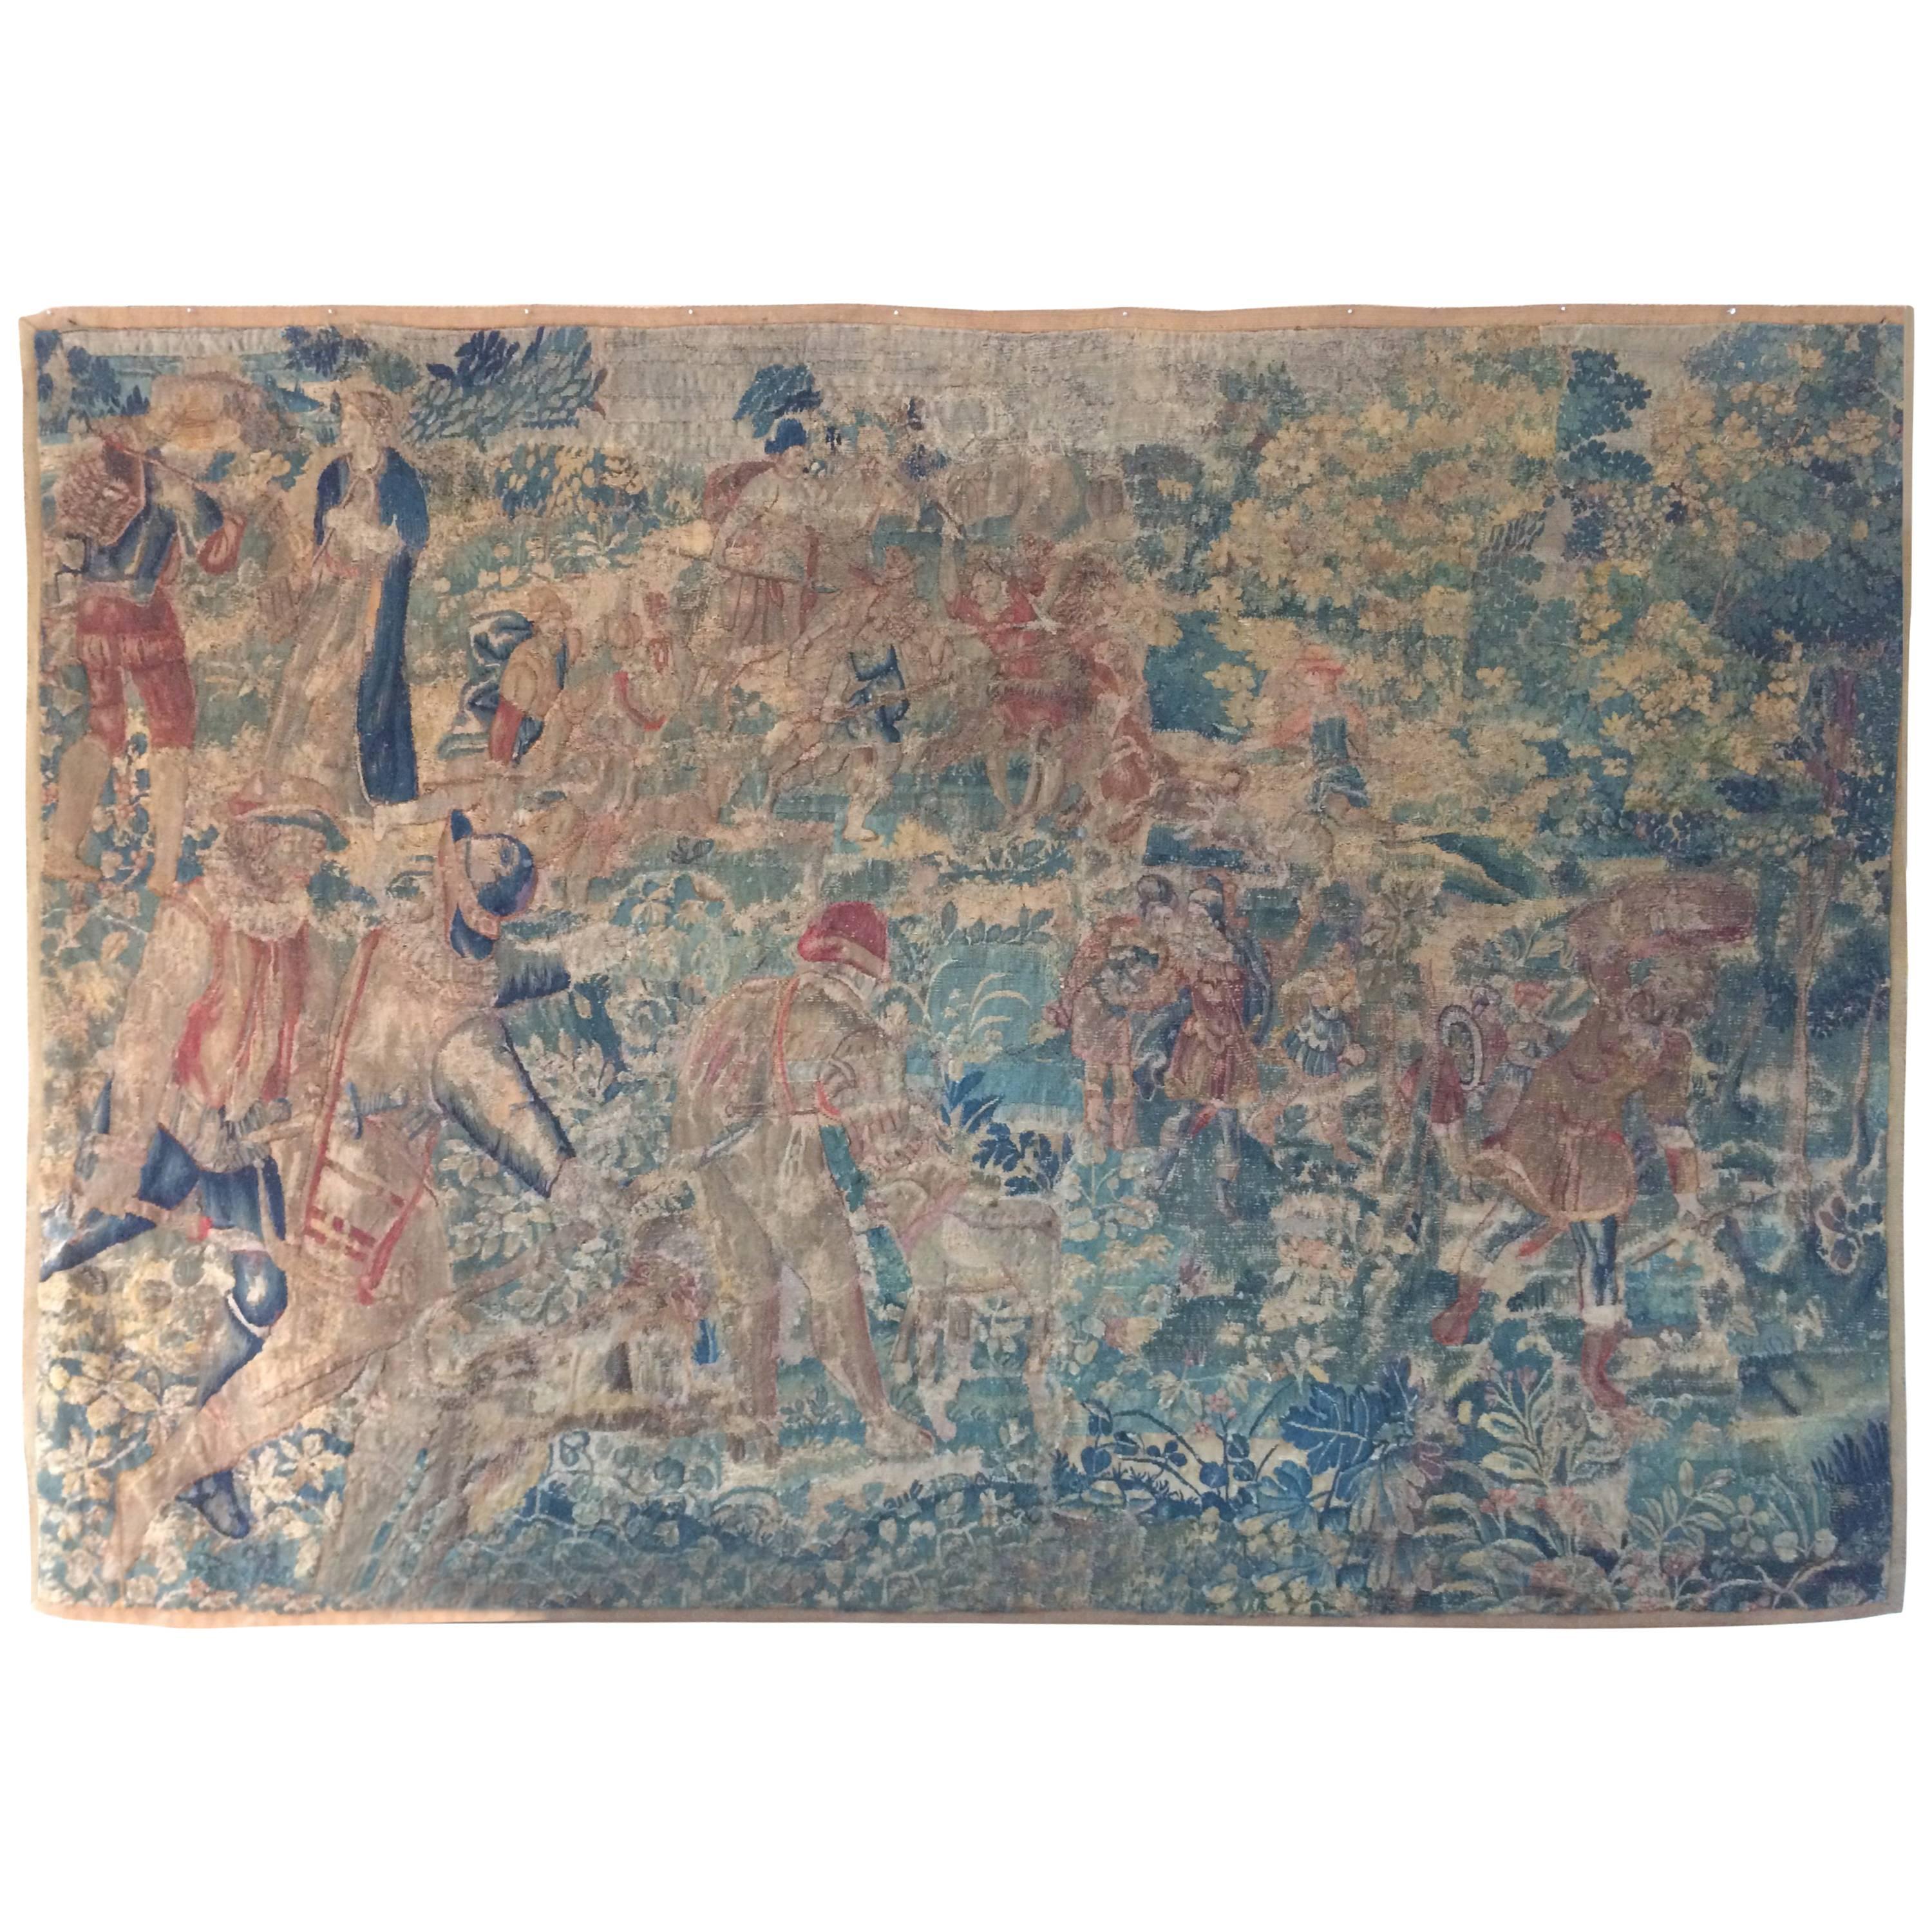 Tapestry 1600 "Chasse de Maximilien" For Sale